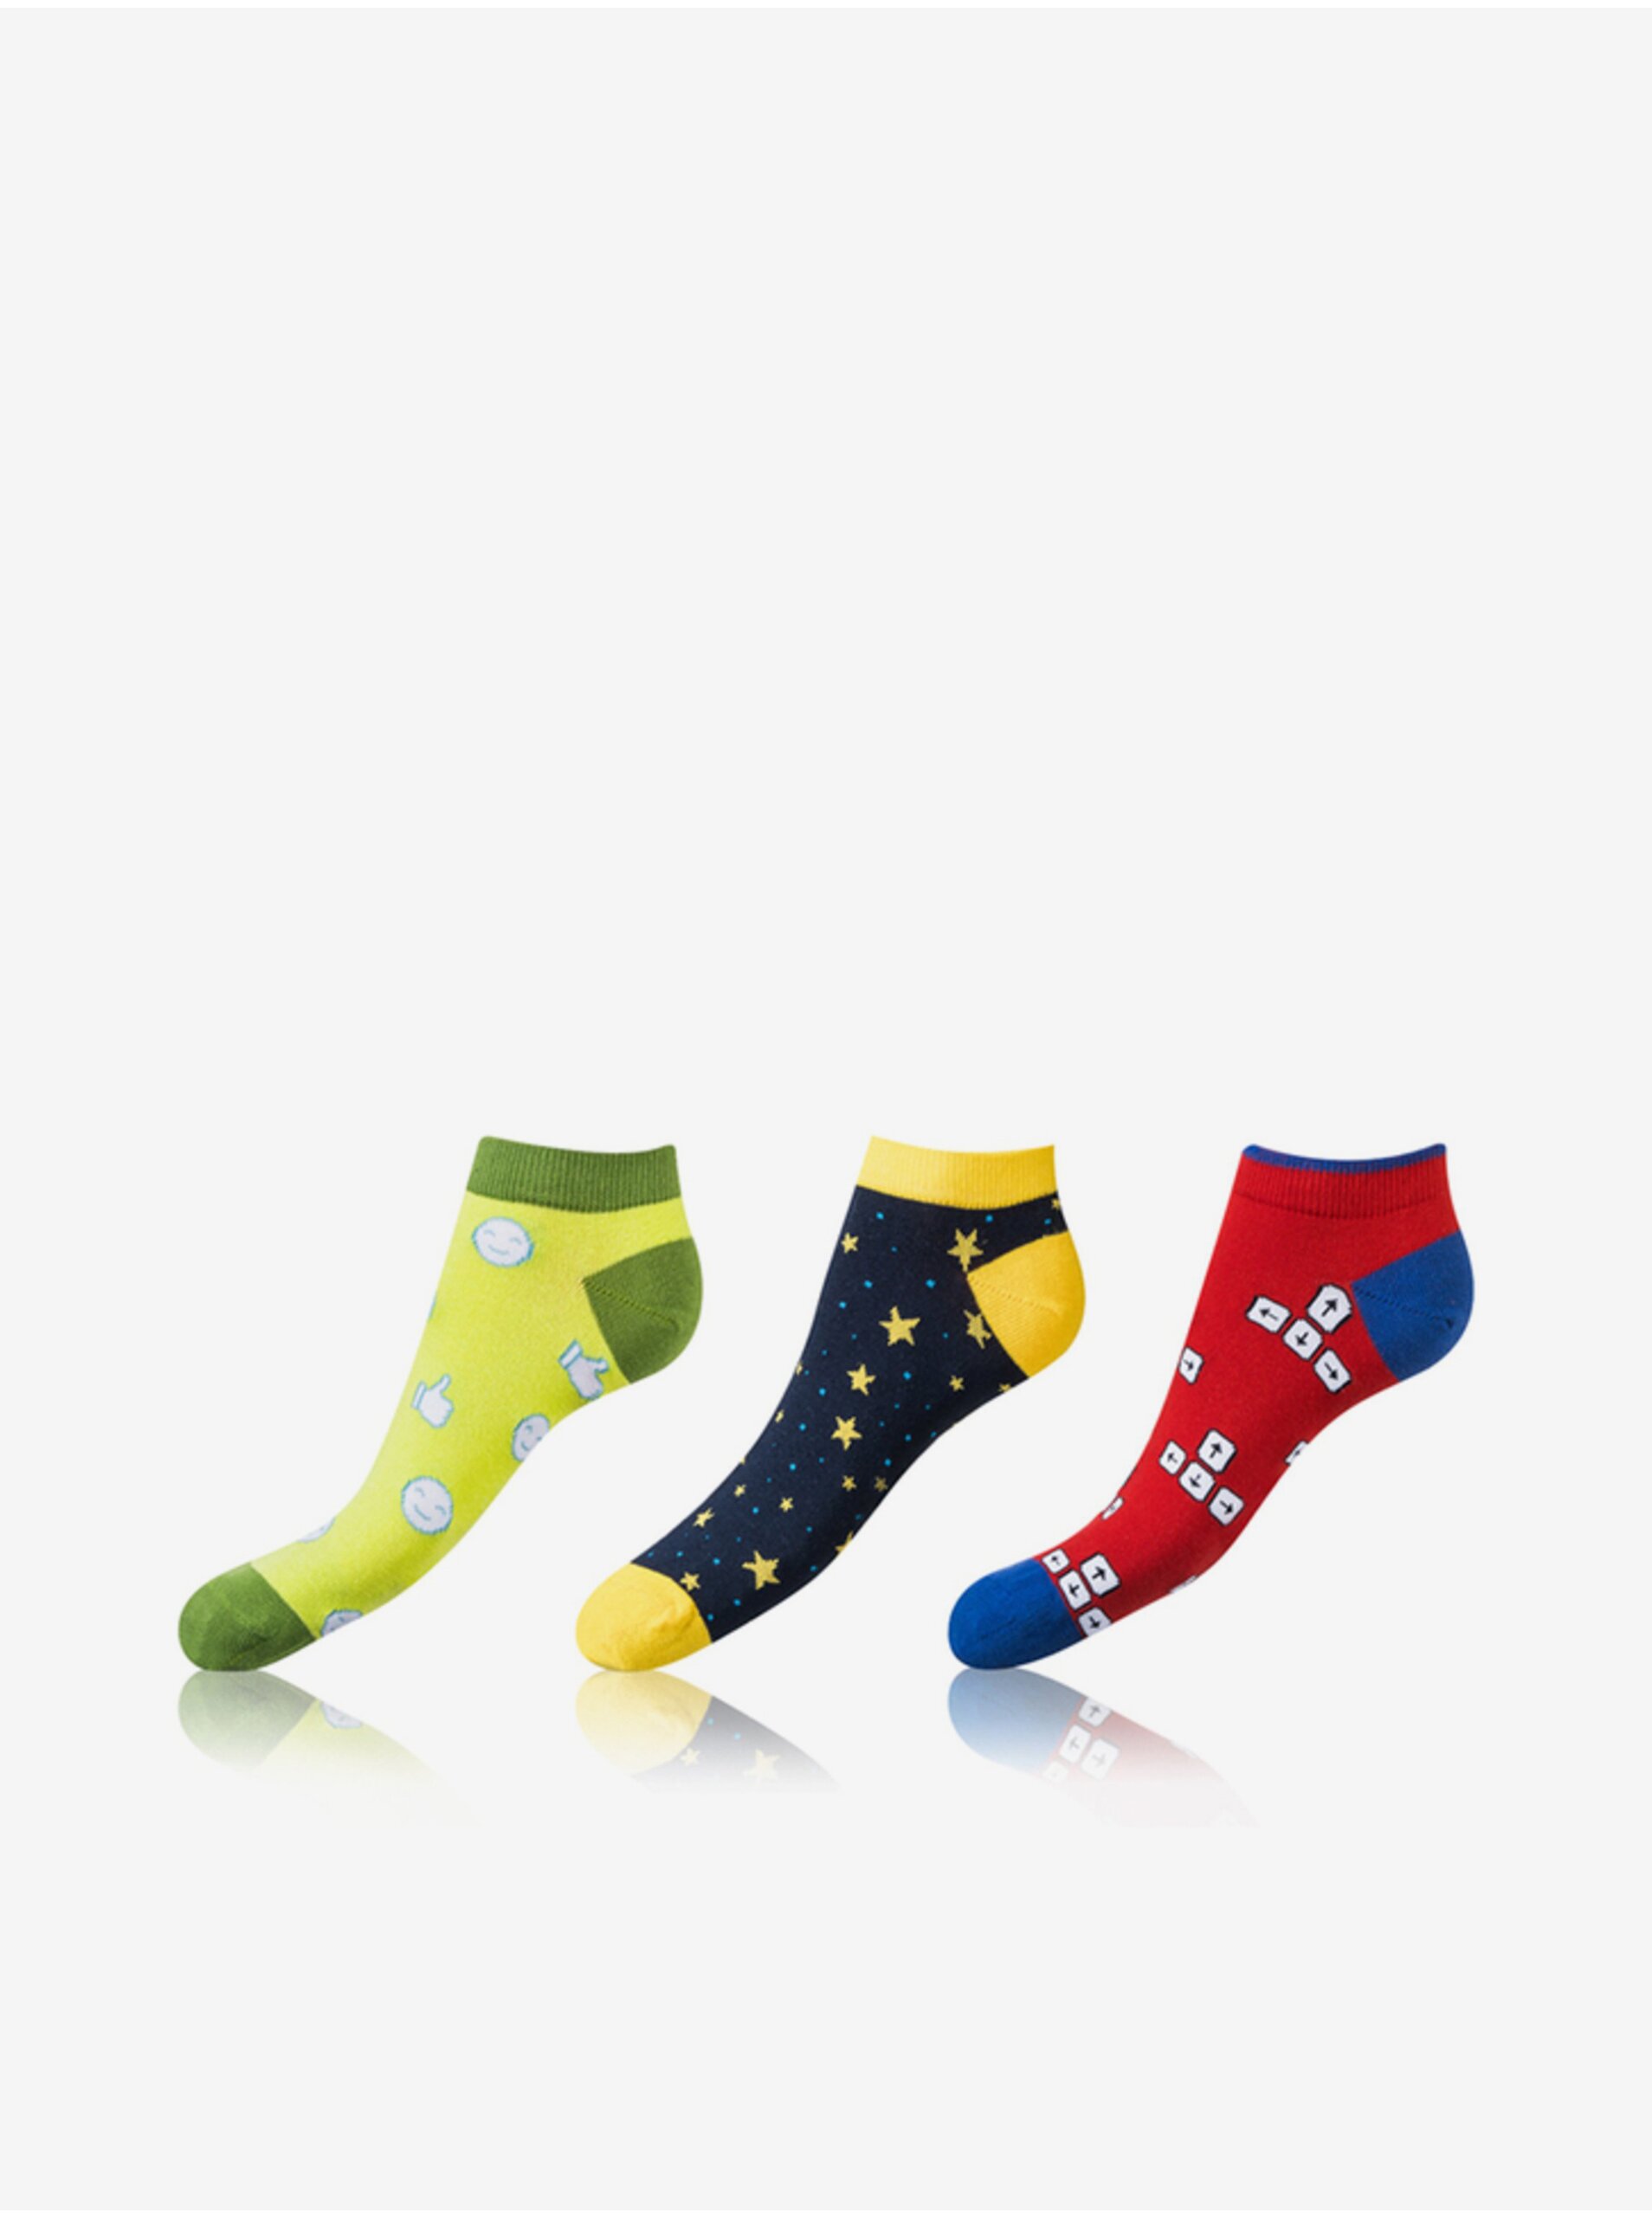 E-shop Sada tří párů unisex barevných vzorovaných ponožek Bellinda CRAZY IN-SHOE SOCKS 3x